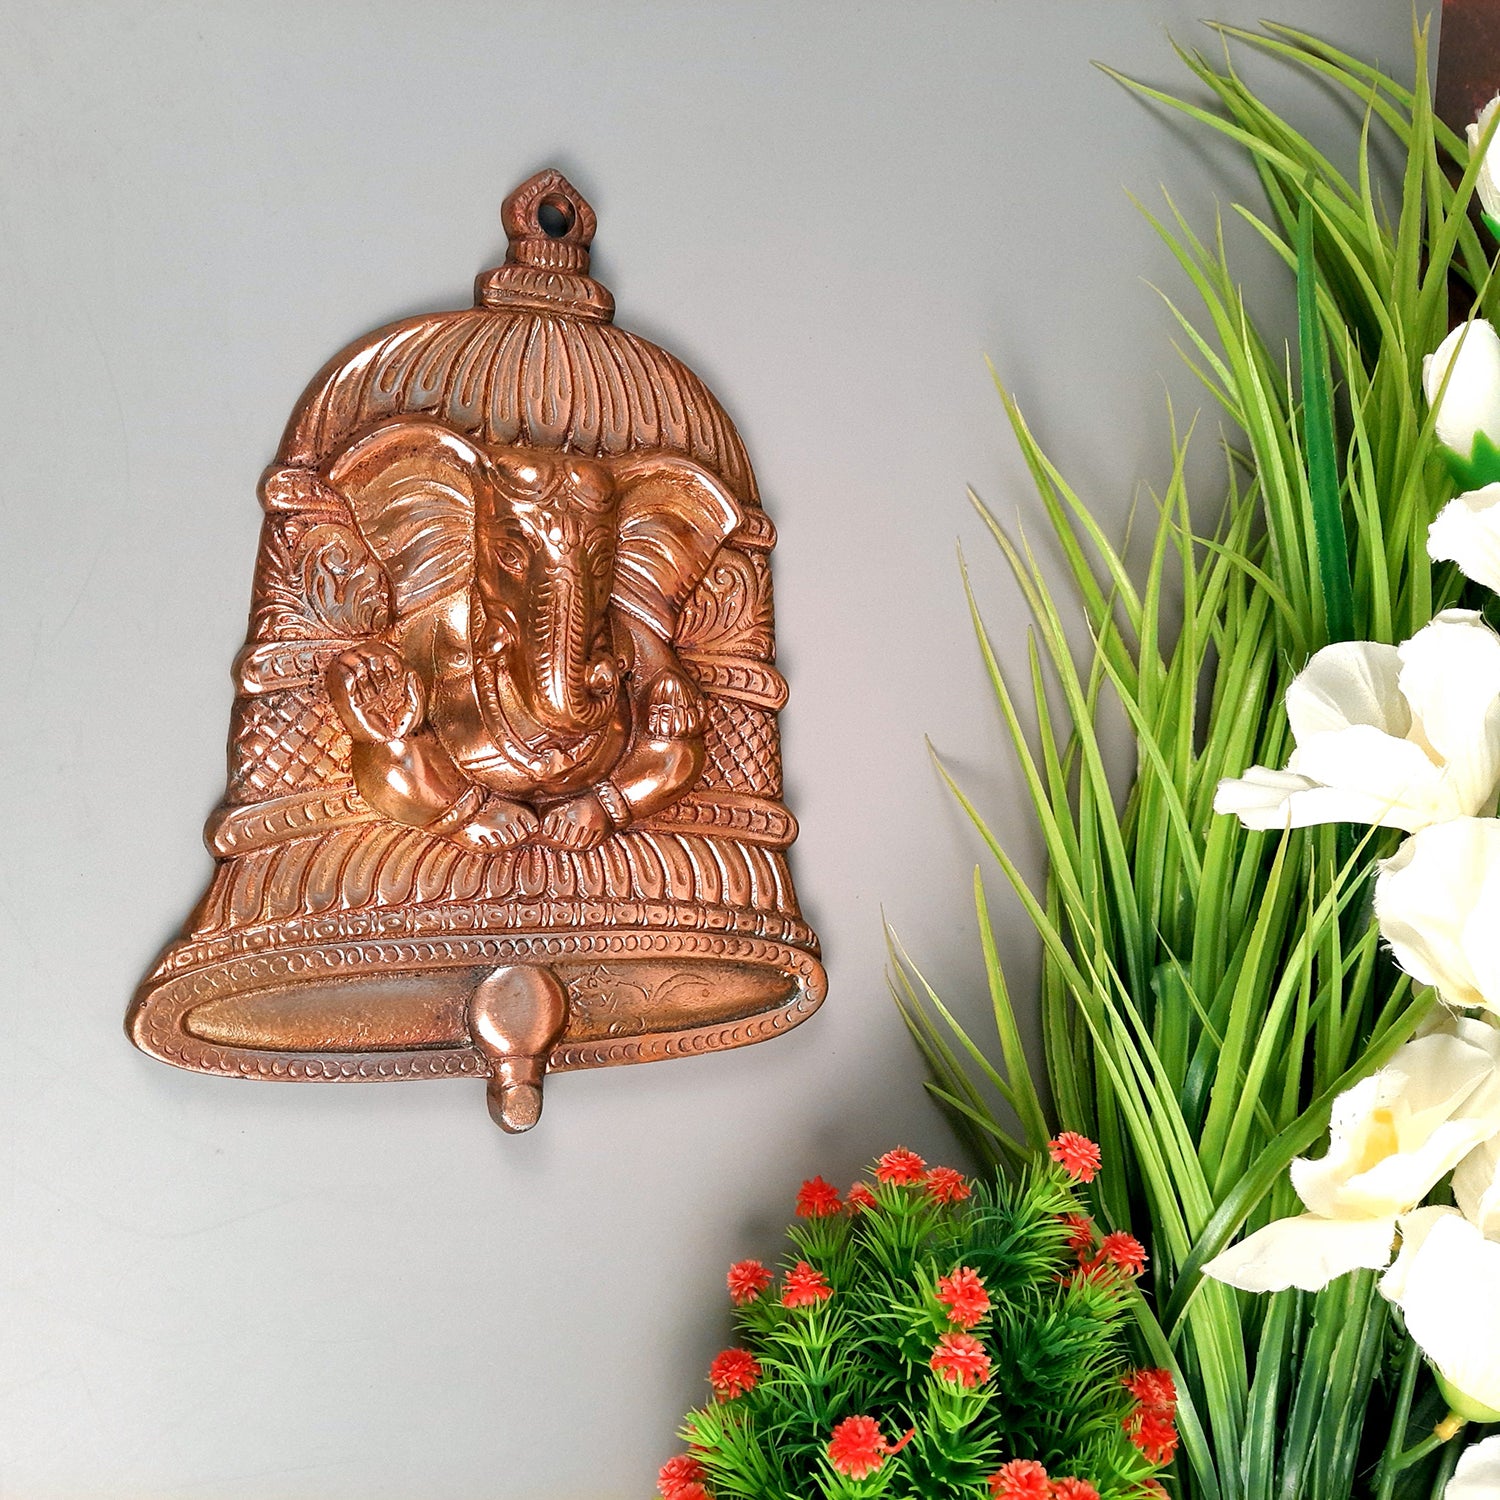 Ganesh Idol Wall Hanging | Lord Ganesha Wall Statue Decor - For Puja, Home & Entrance Living Room & Gift - 9 Inch - Apkamart